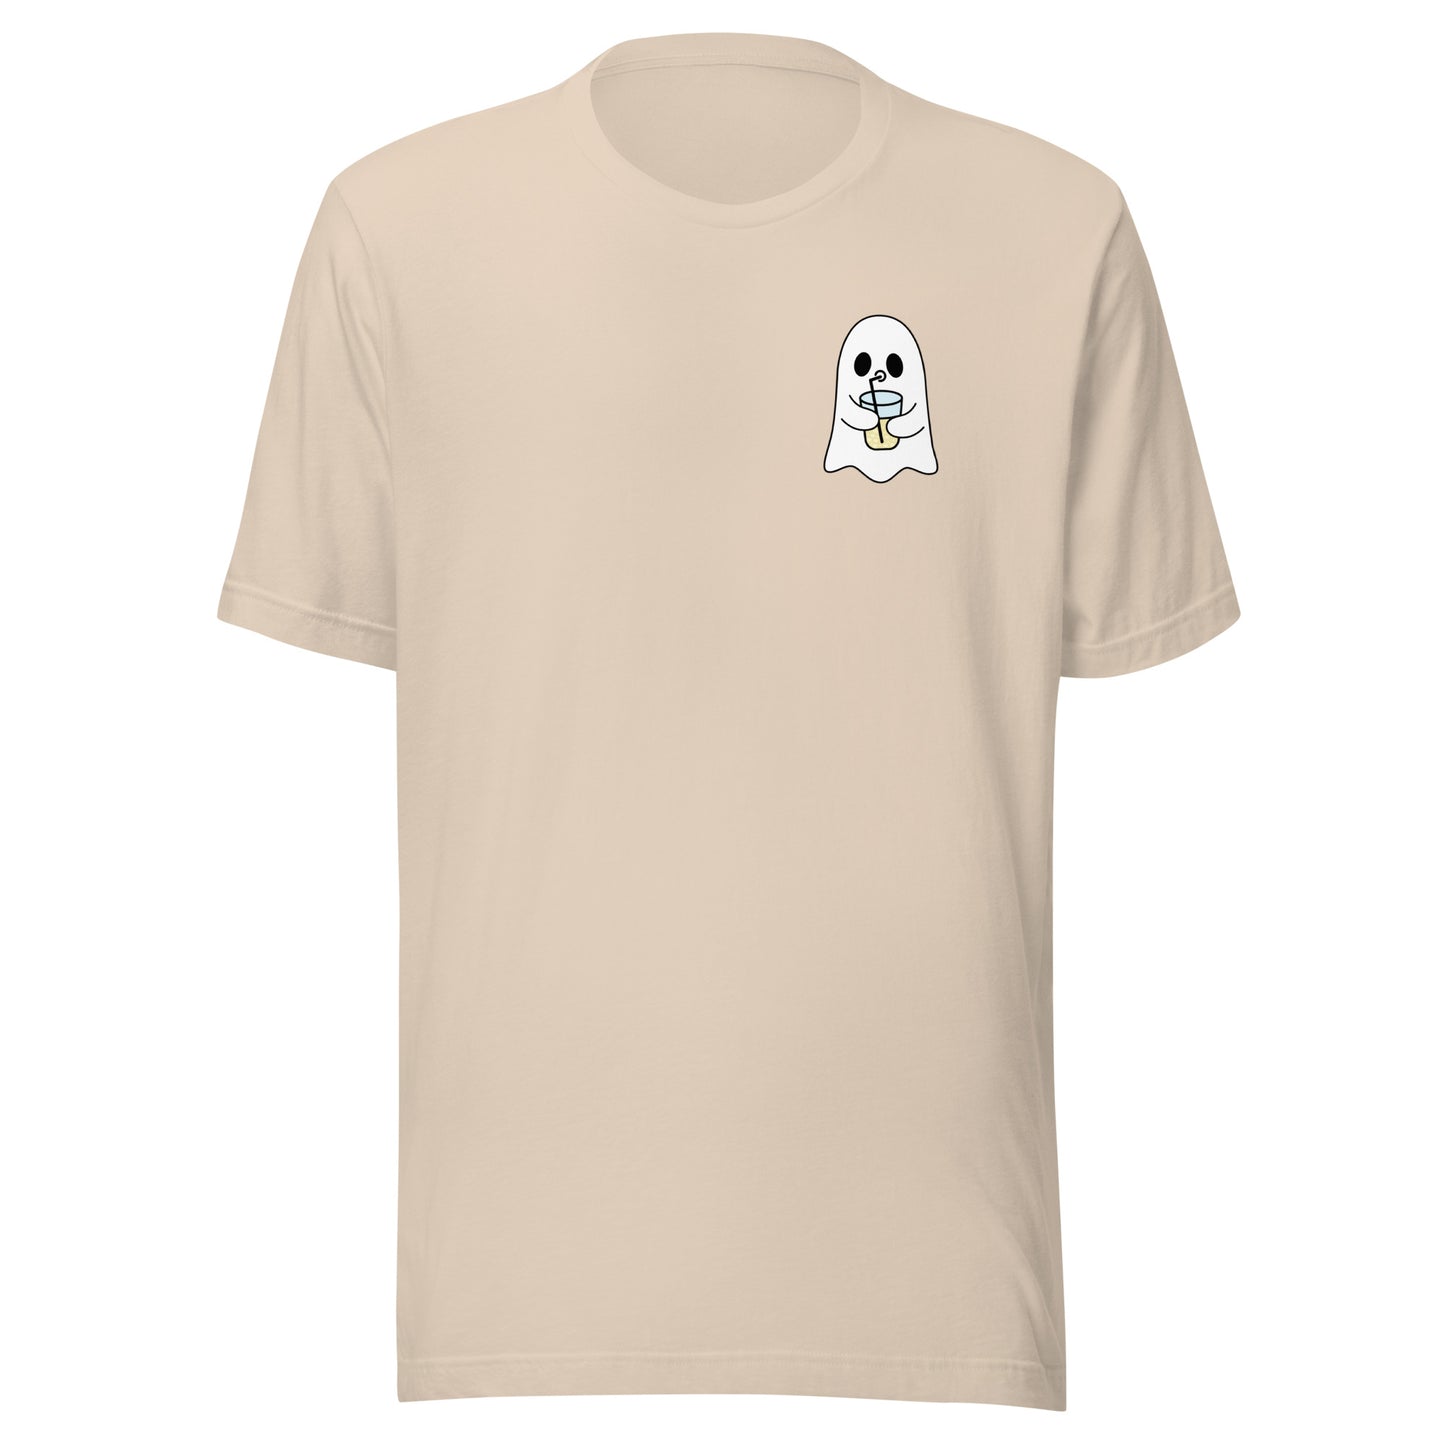 Iced Coffee Cute Ghost T-Shirt